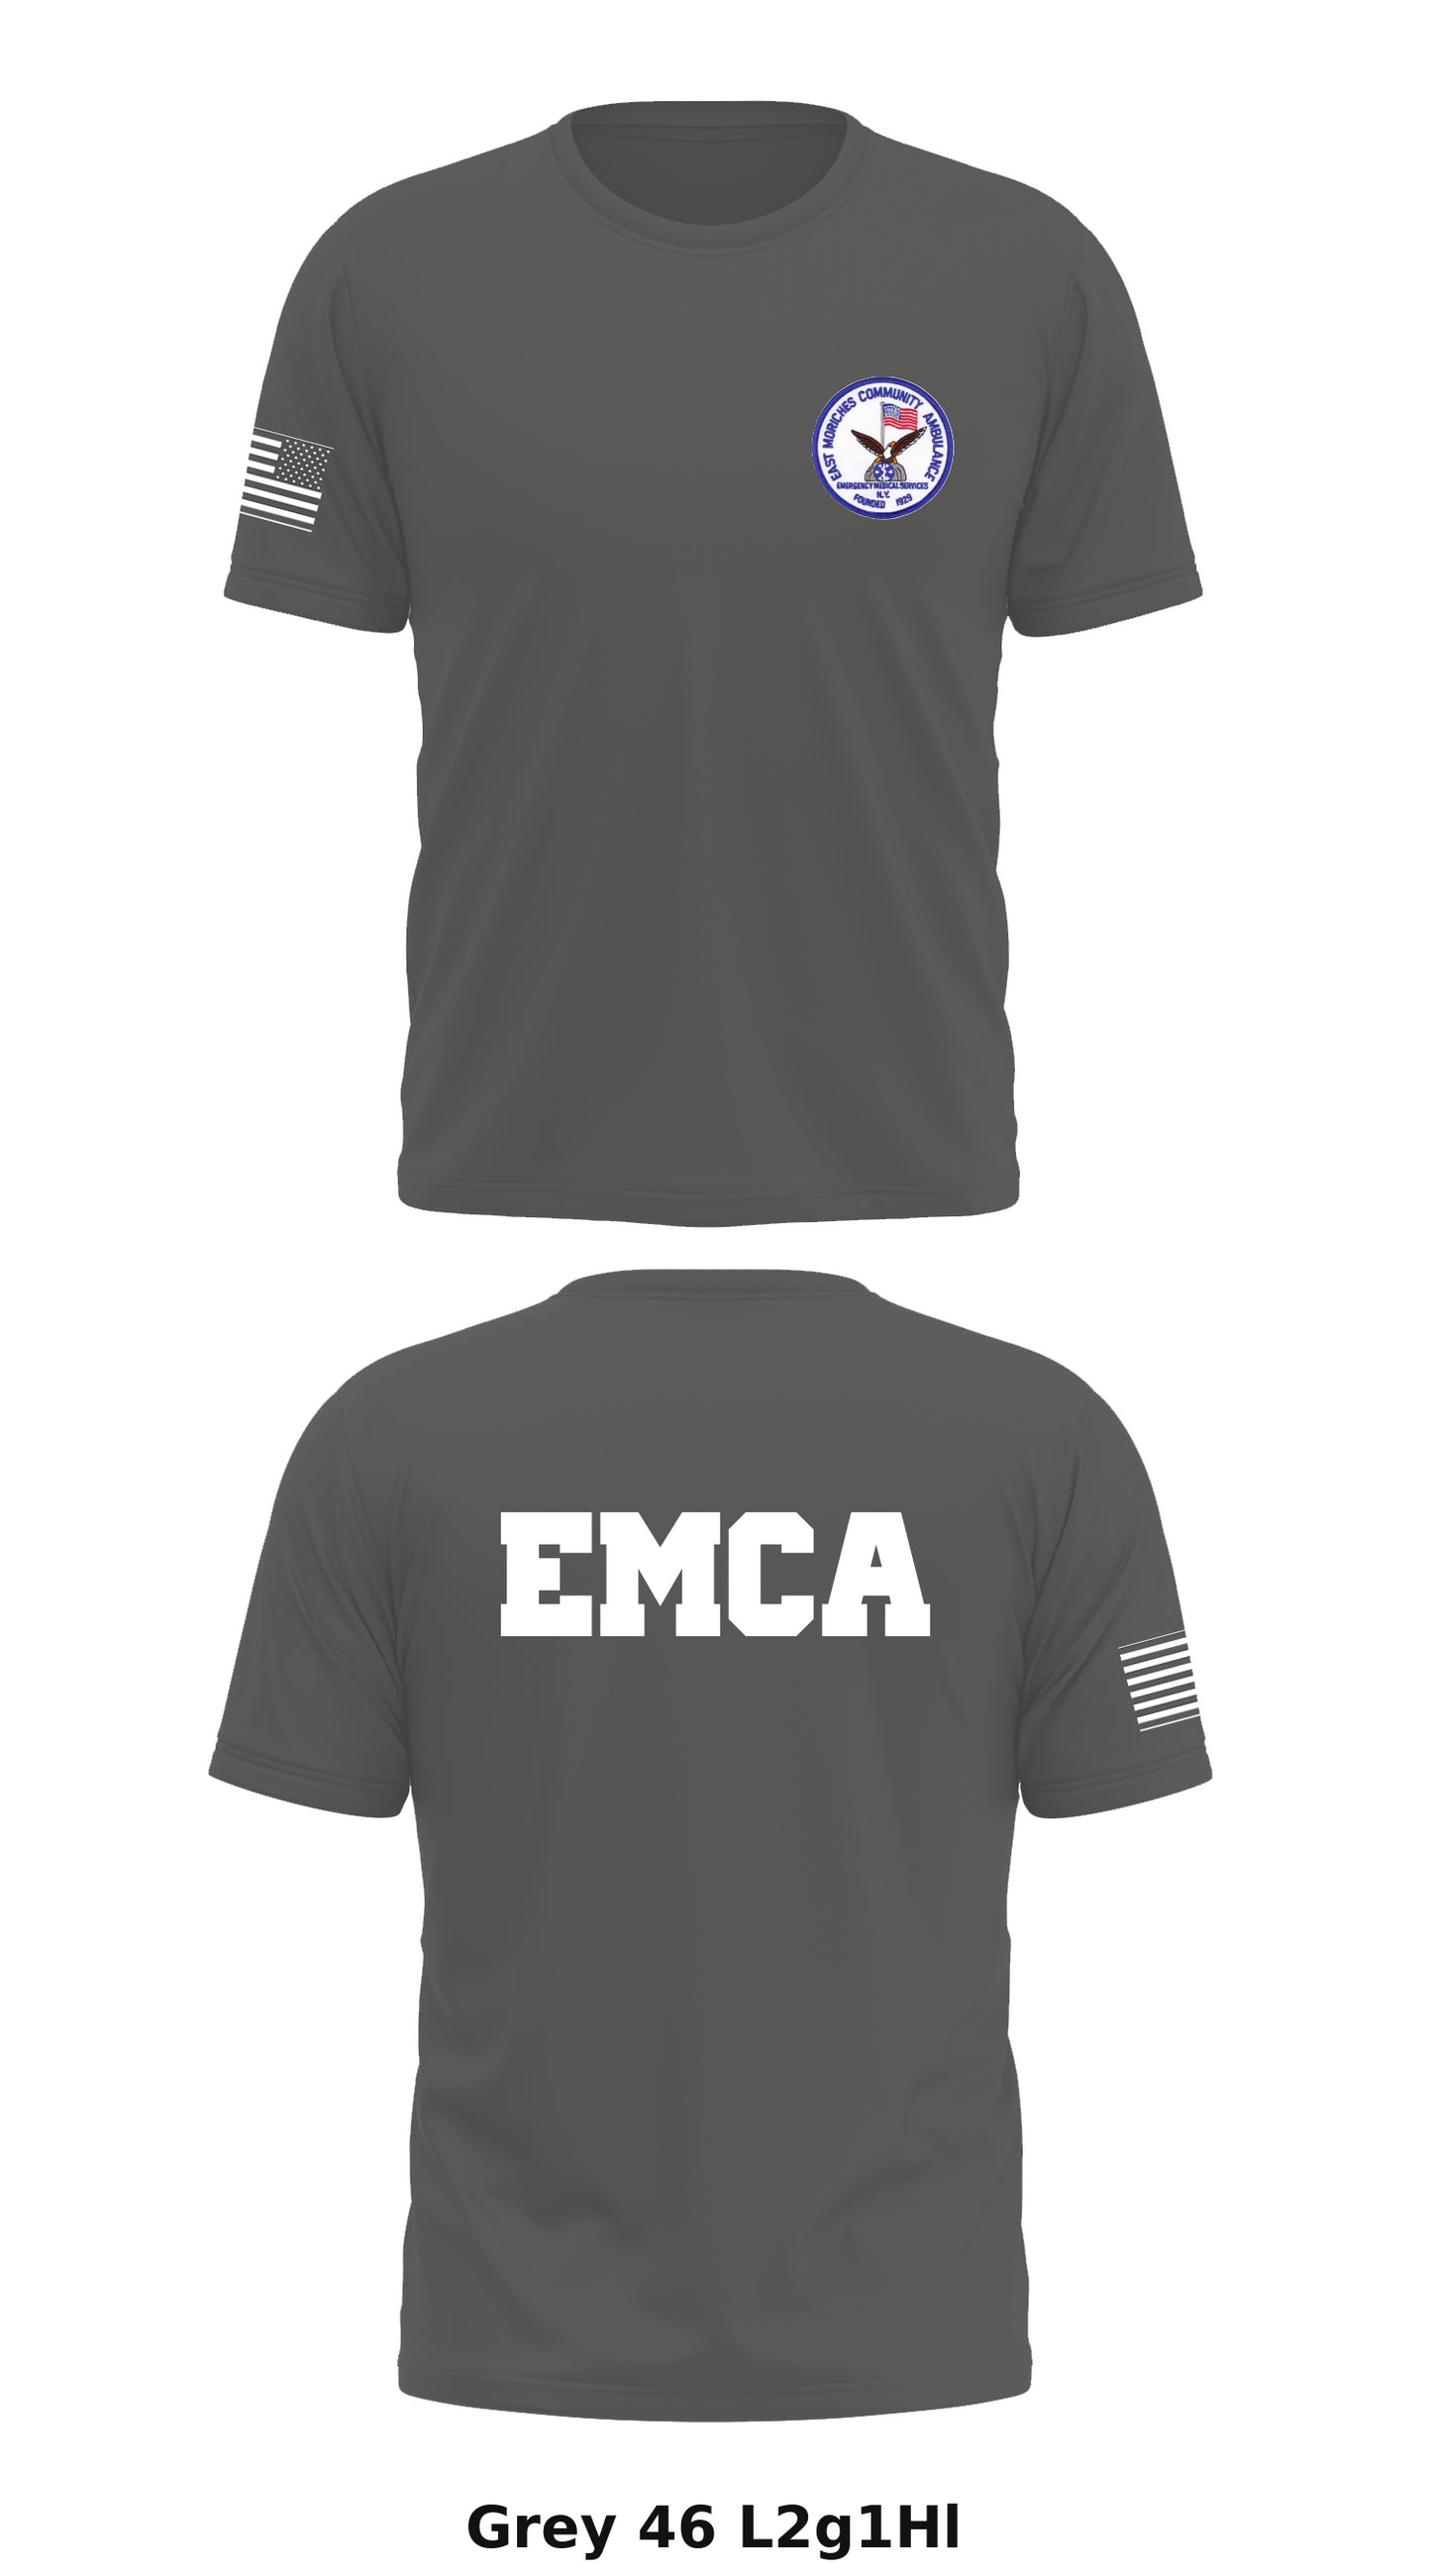 EMCA Store 1 Core Men's SS Performance Tee - L2g1Hl